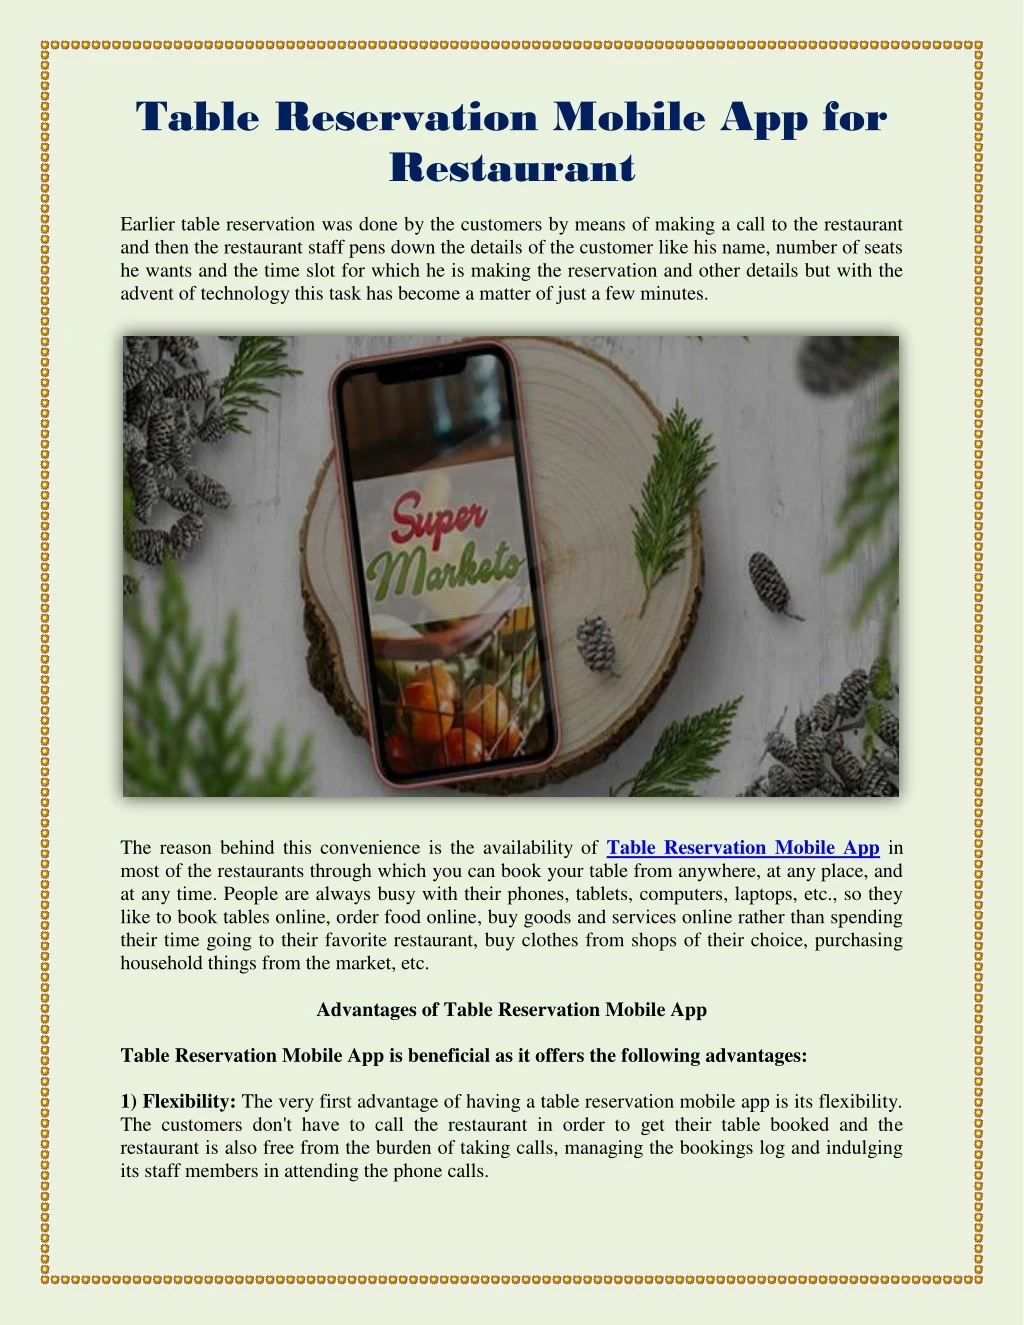 table reservation mobile app for restaurant